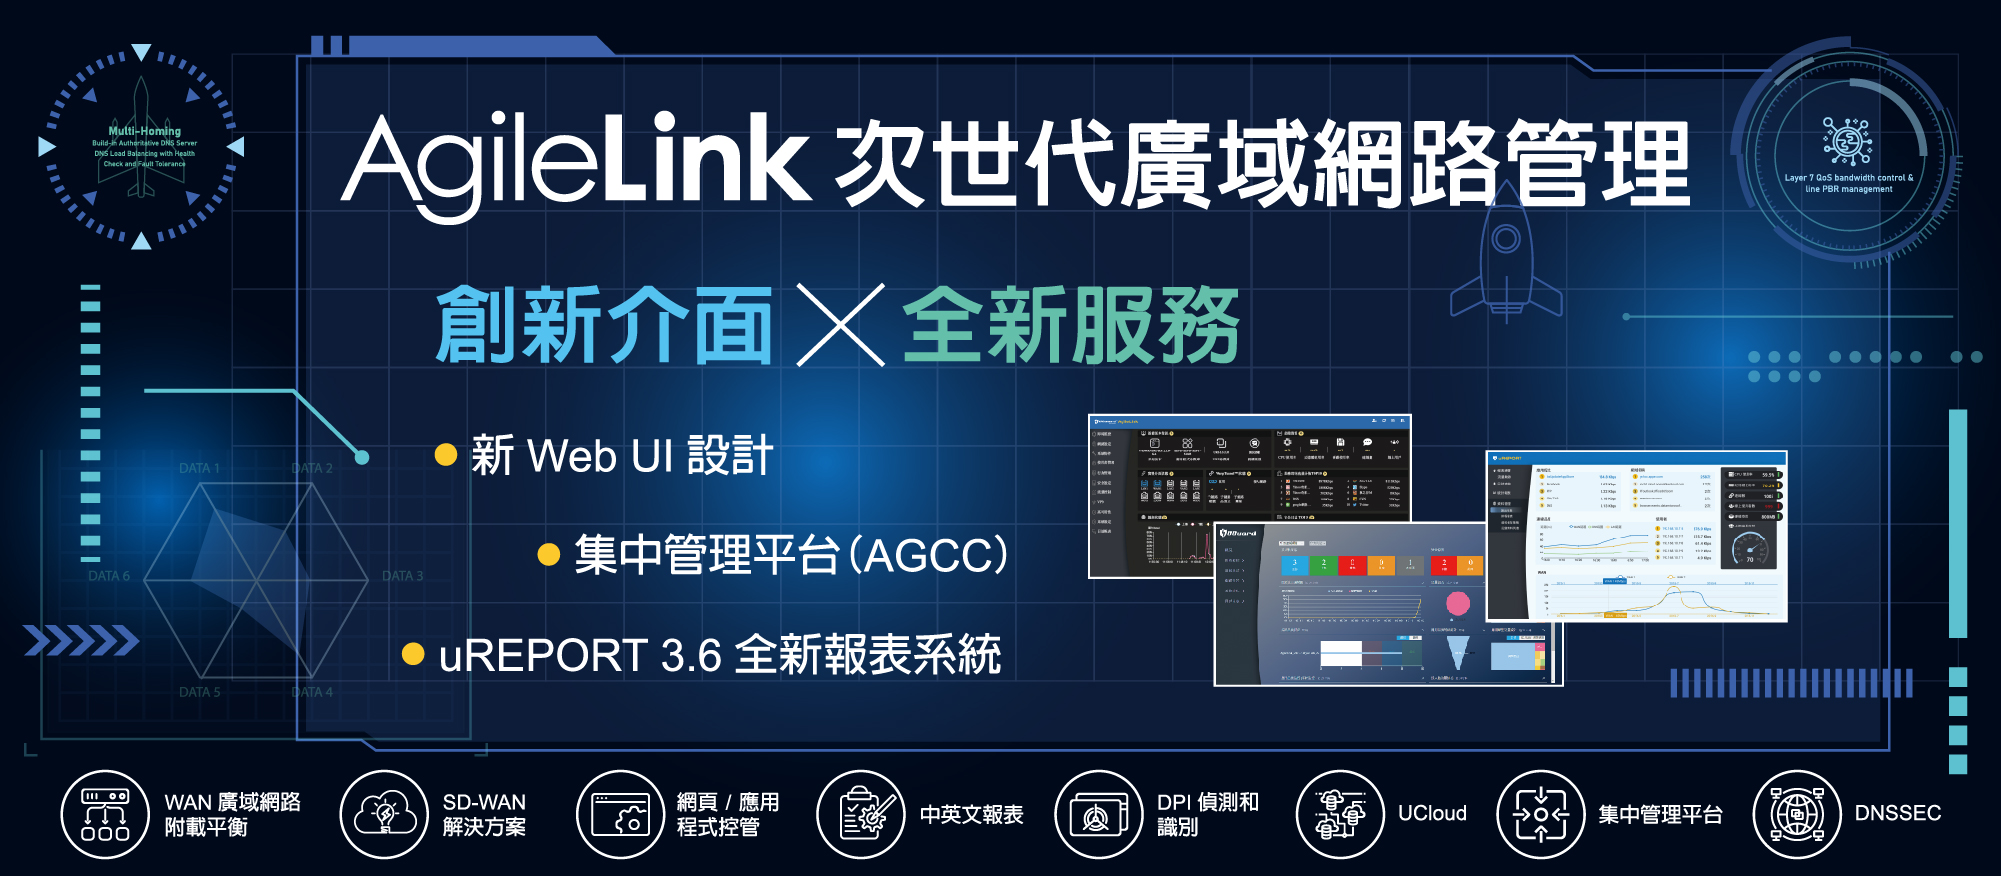 AgileLink 次世代網路管理－創新介面 X 全新服務